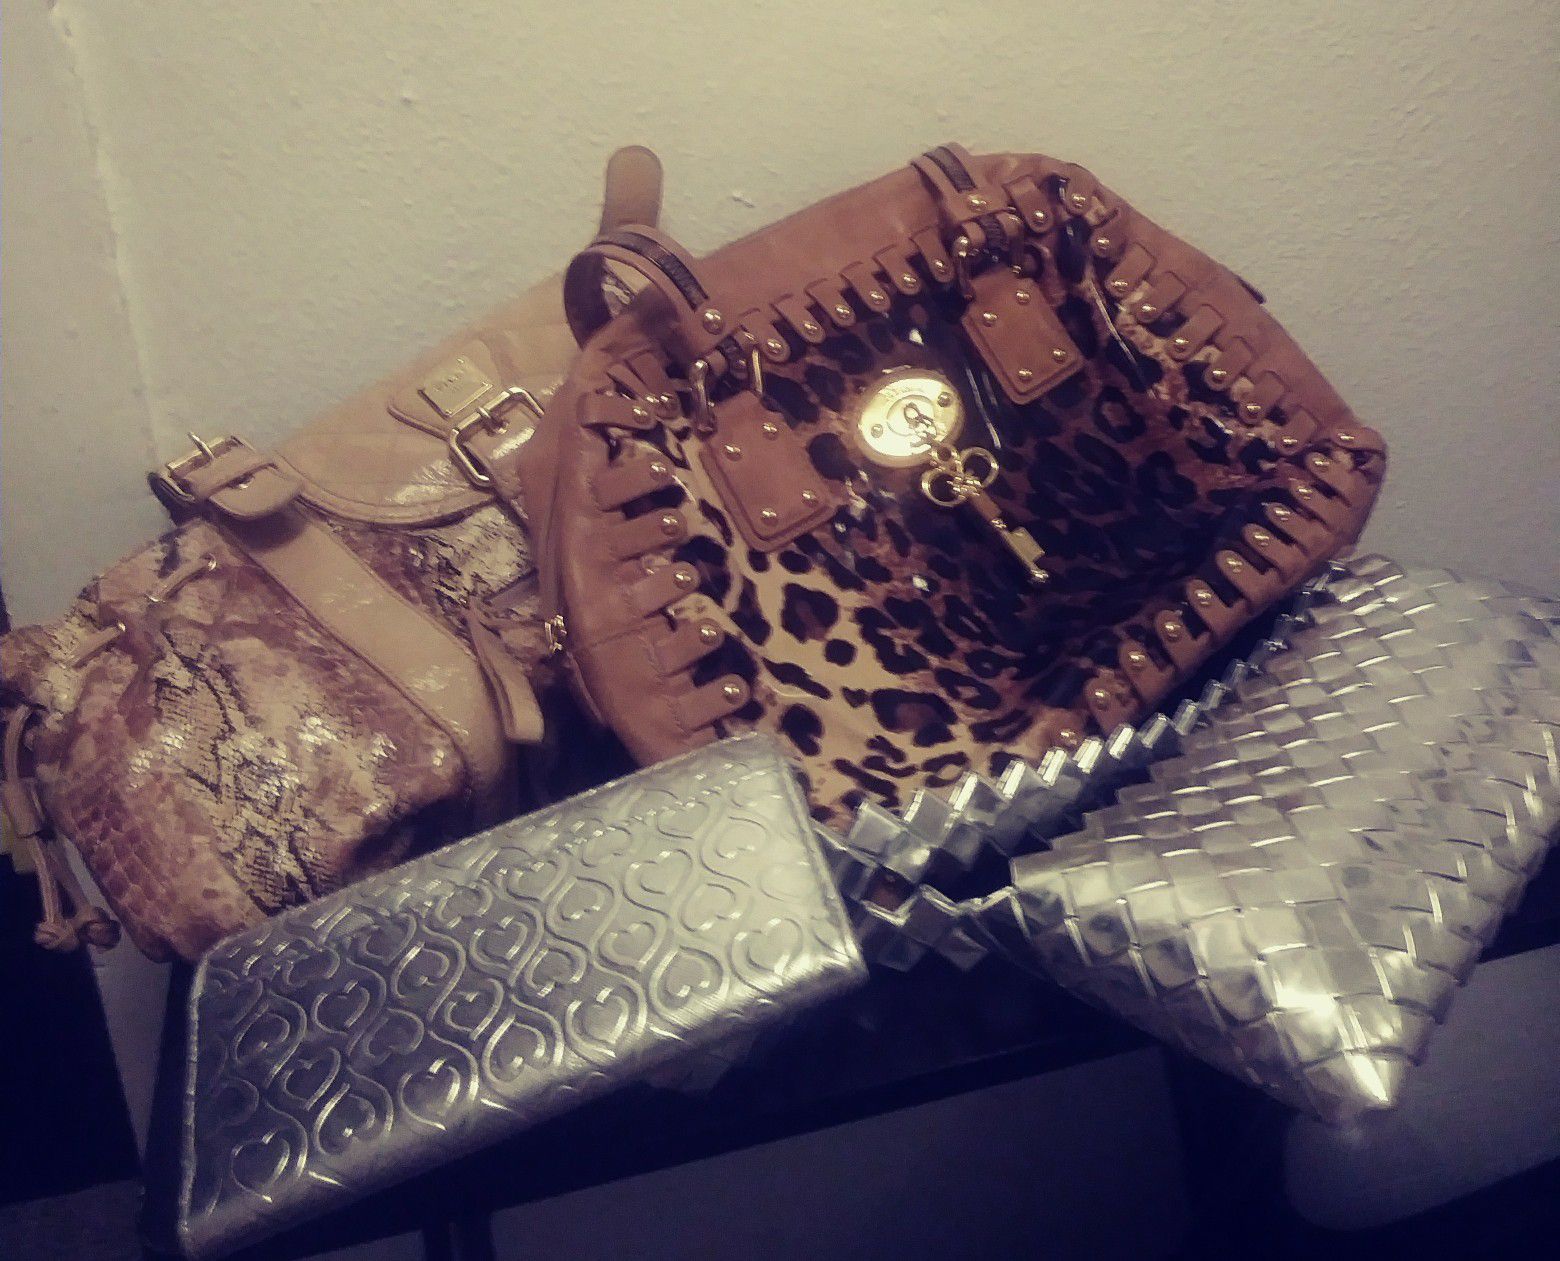 Handbags all for $15